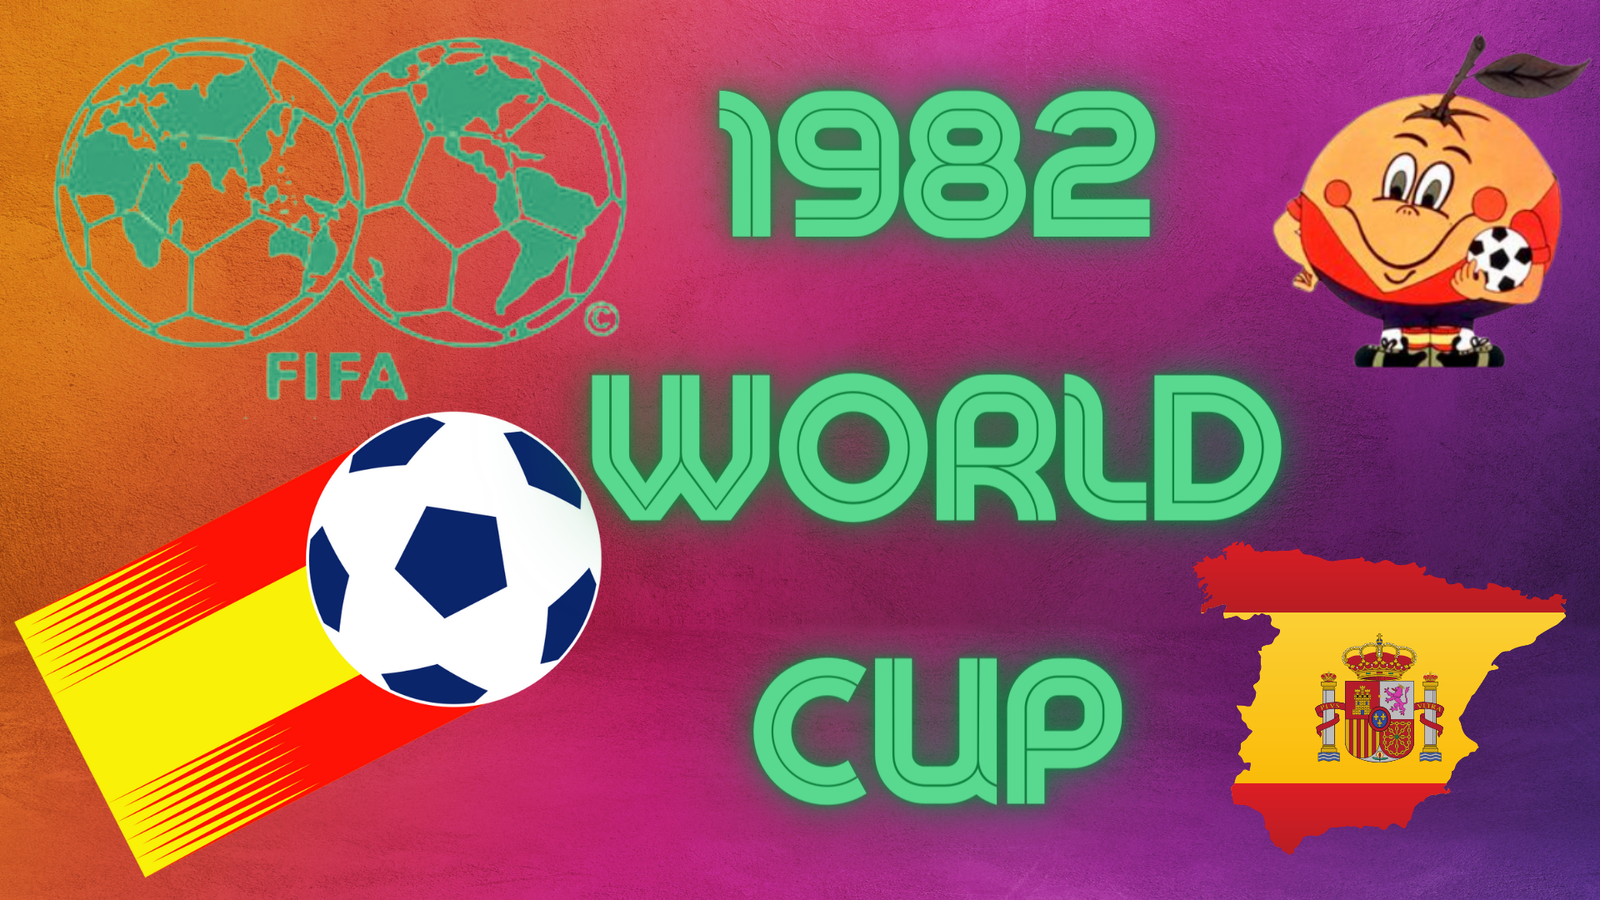 Fifa World Cup 1982